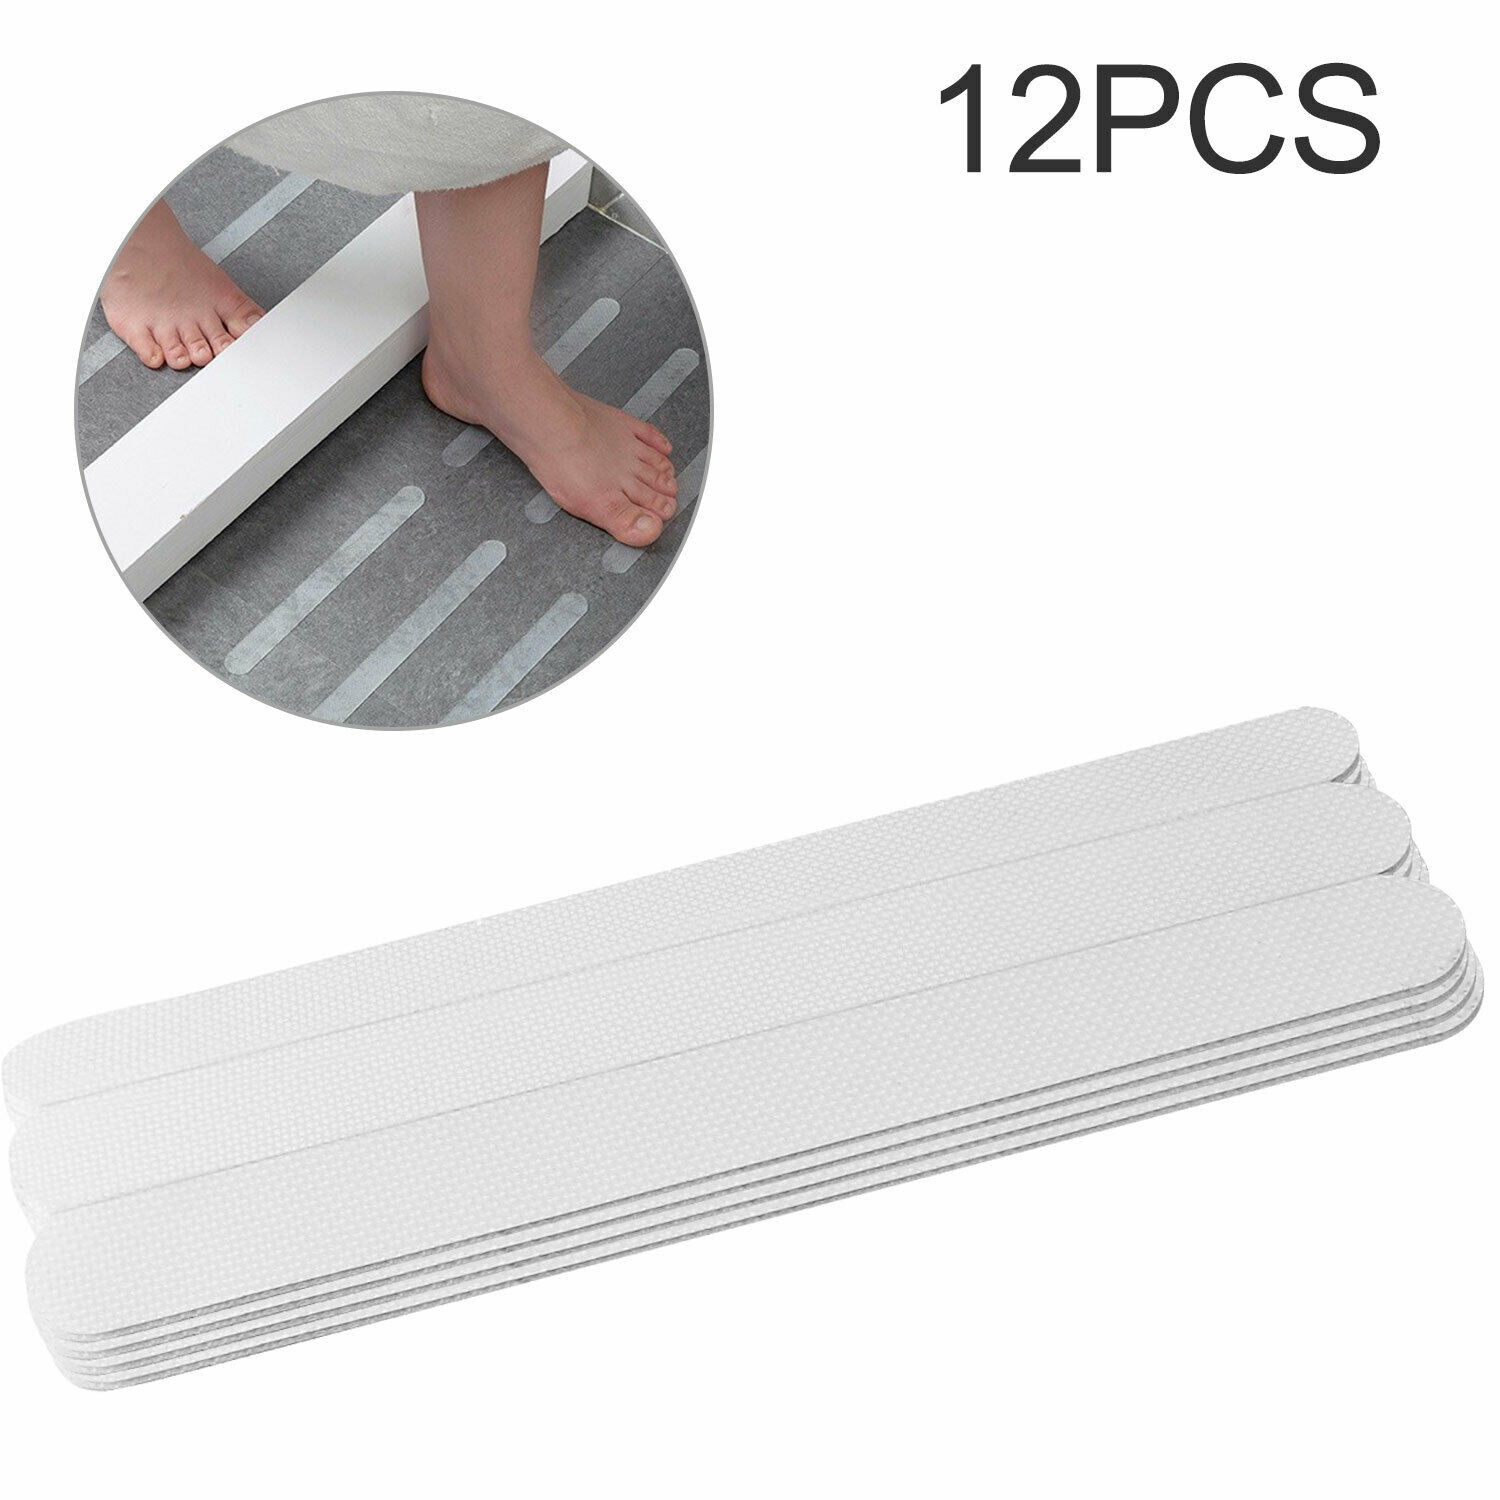 12pcs Safety Treads Non-slip Applique Stickers Strips Bathtub Shower Stair Mat